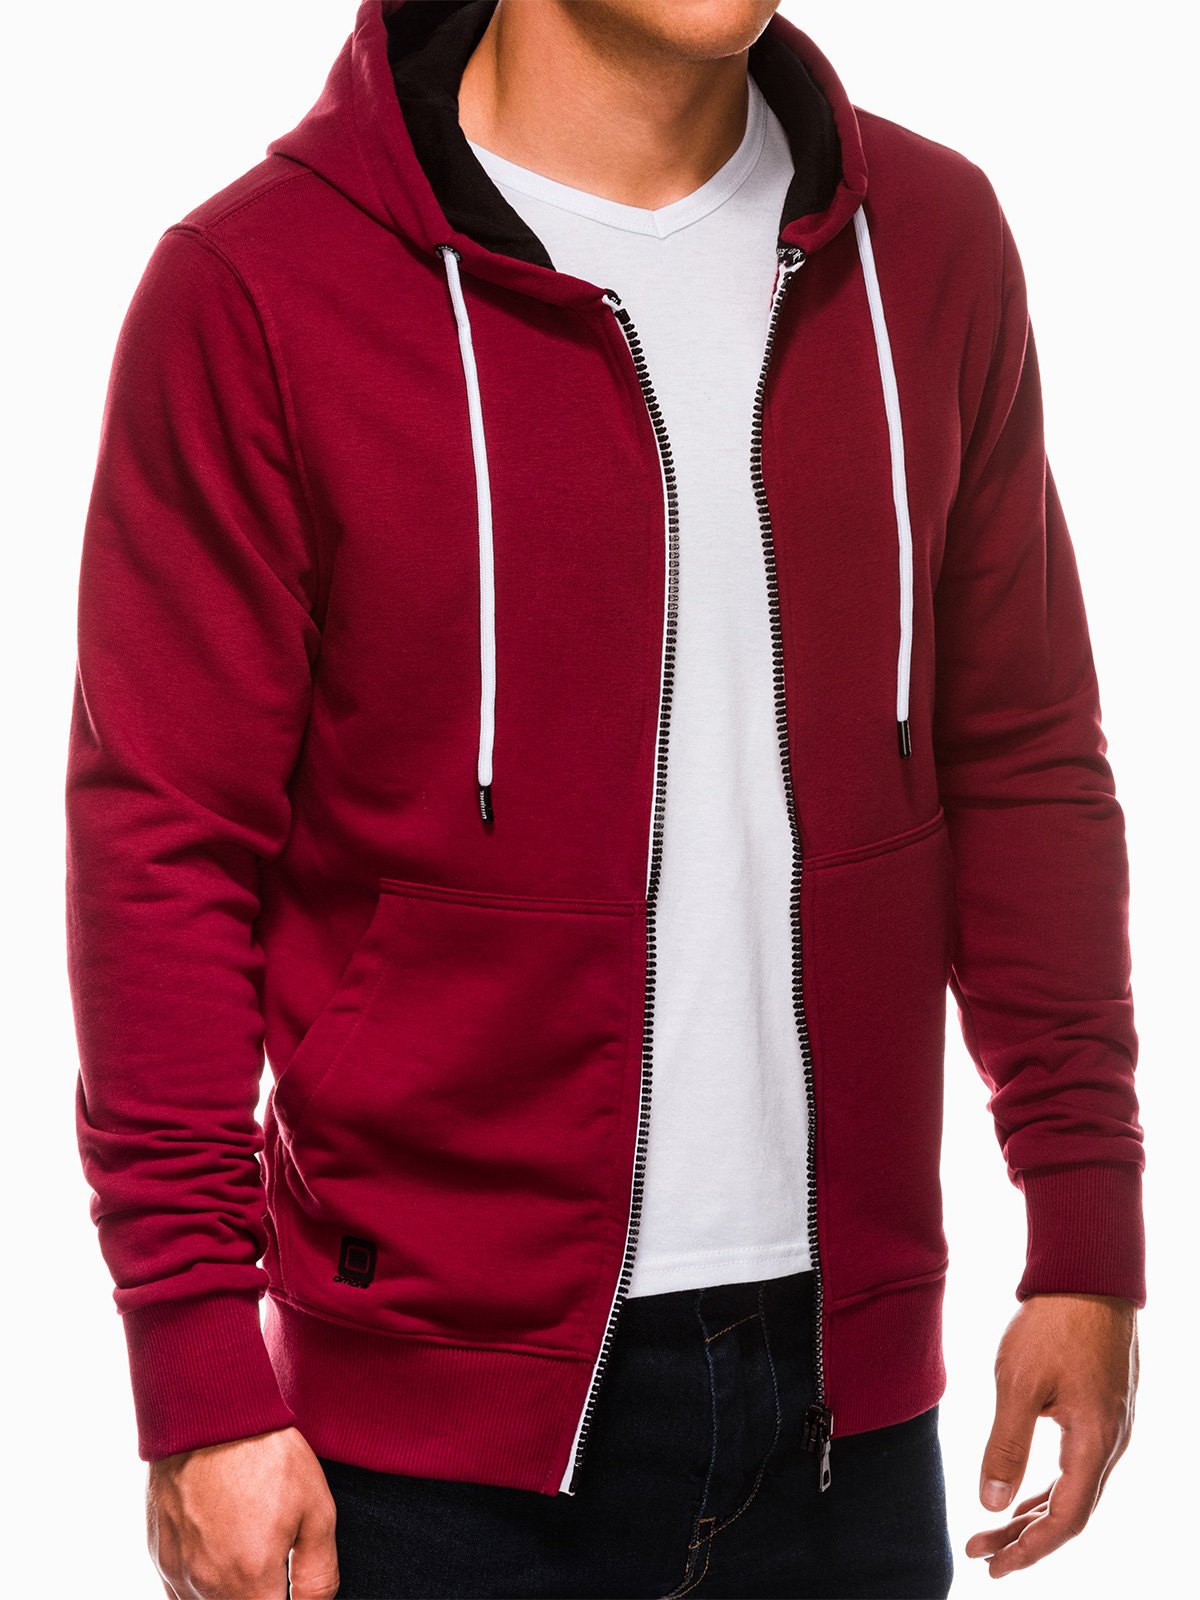 Men's zip-up sweatshirt B976 - dark red | MODONE wholesale - Clothing ...